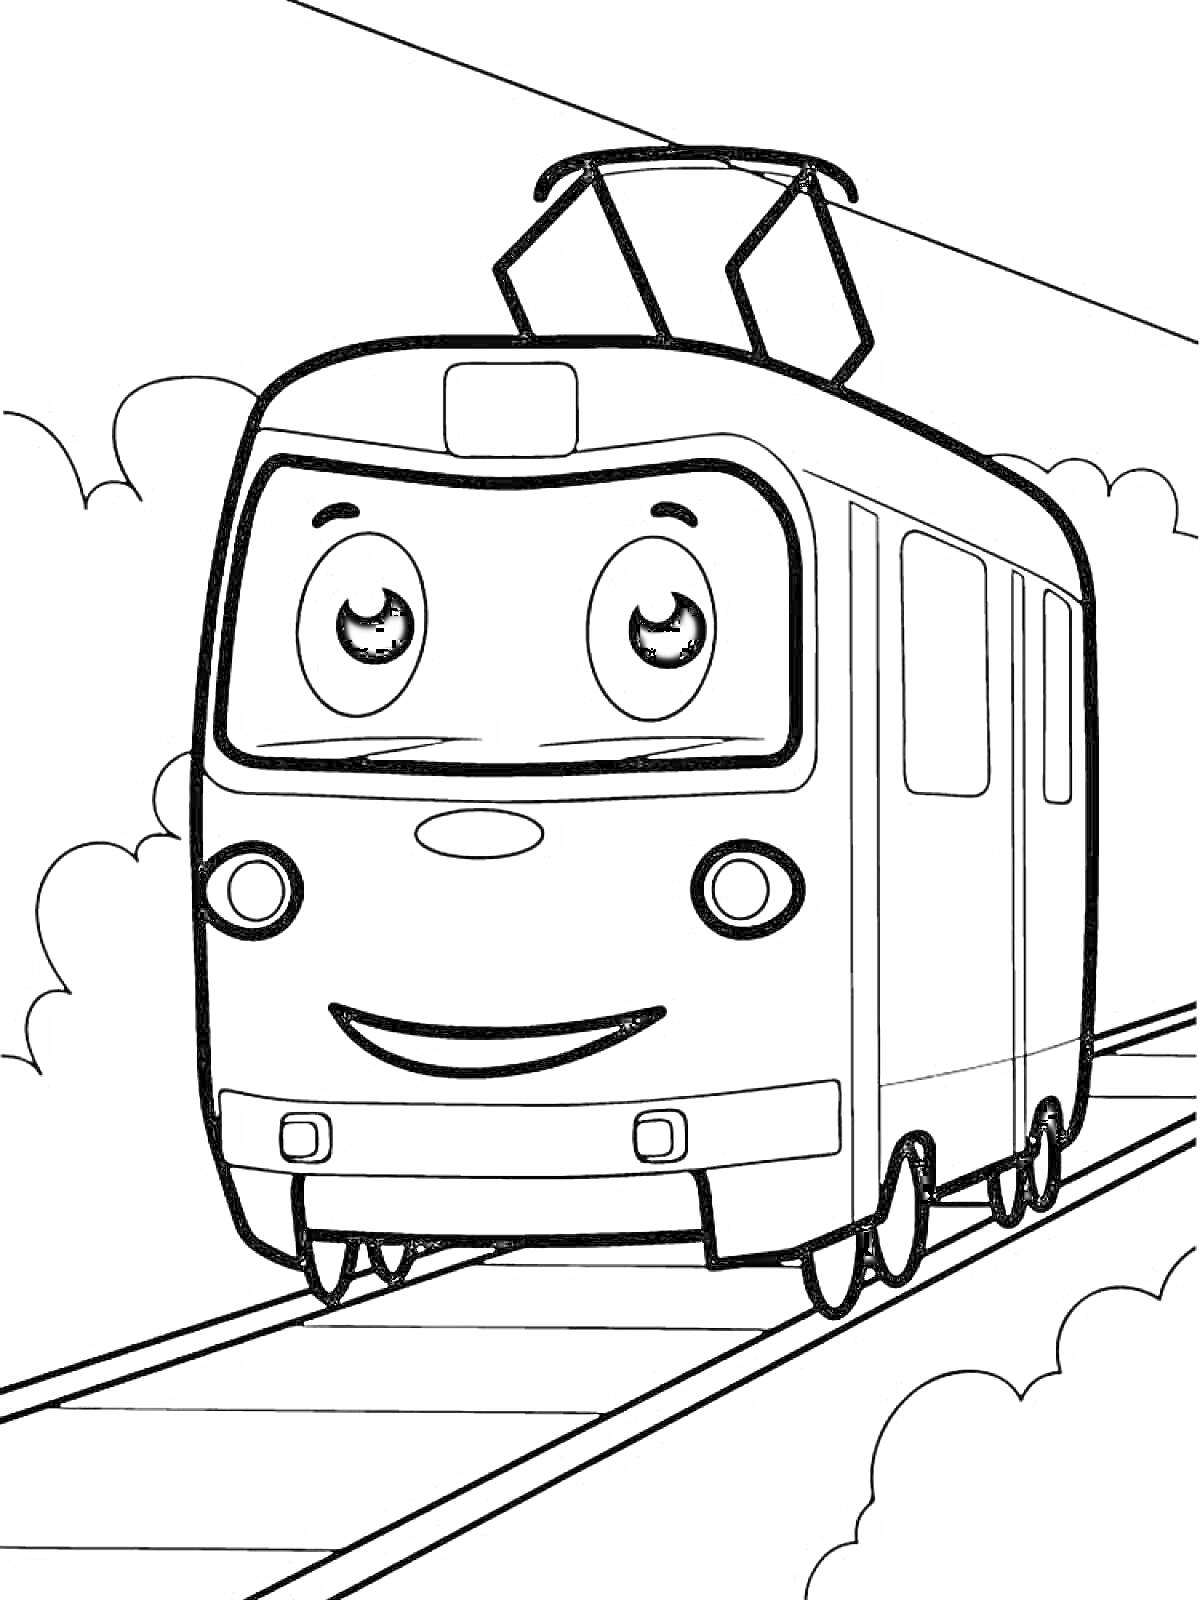 Раскраска Трамвай с улыбающимся лицом на рельсах, облака на заднем плане